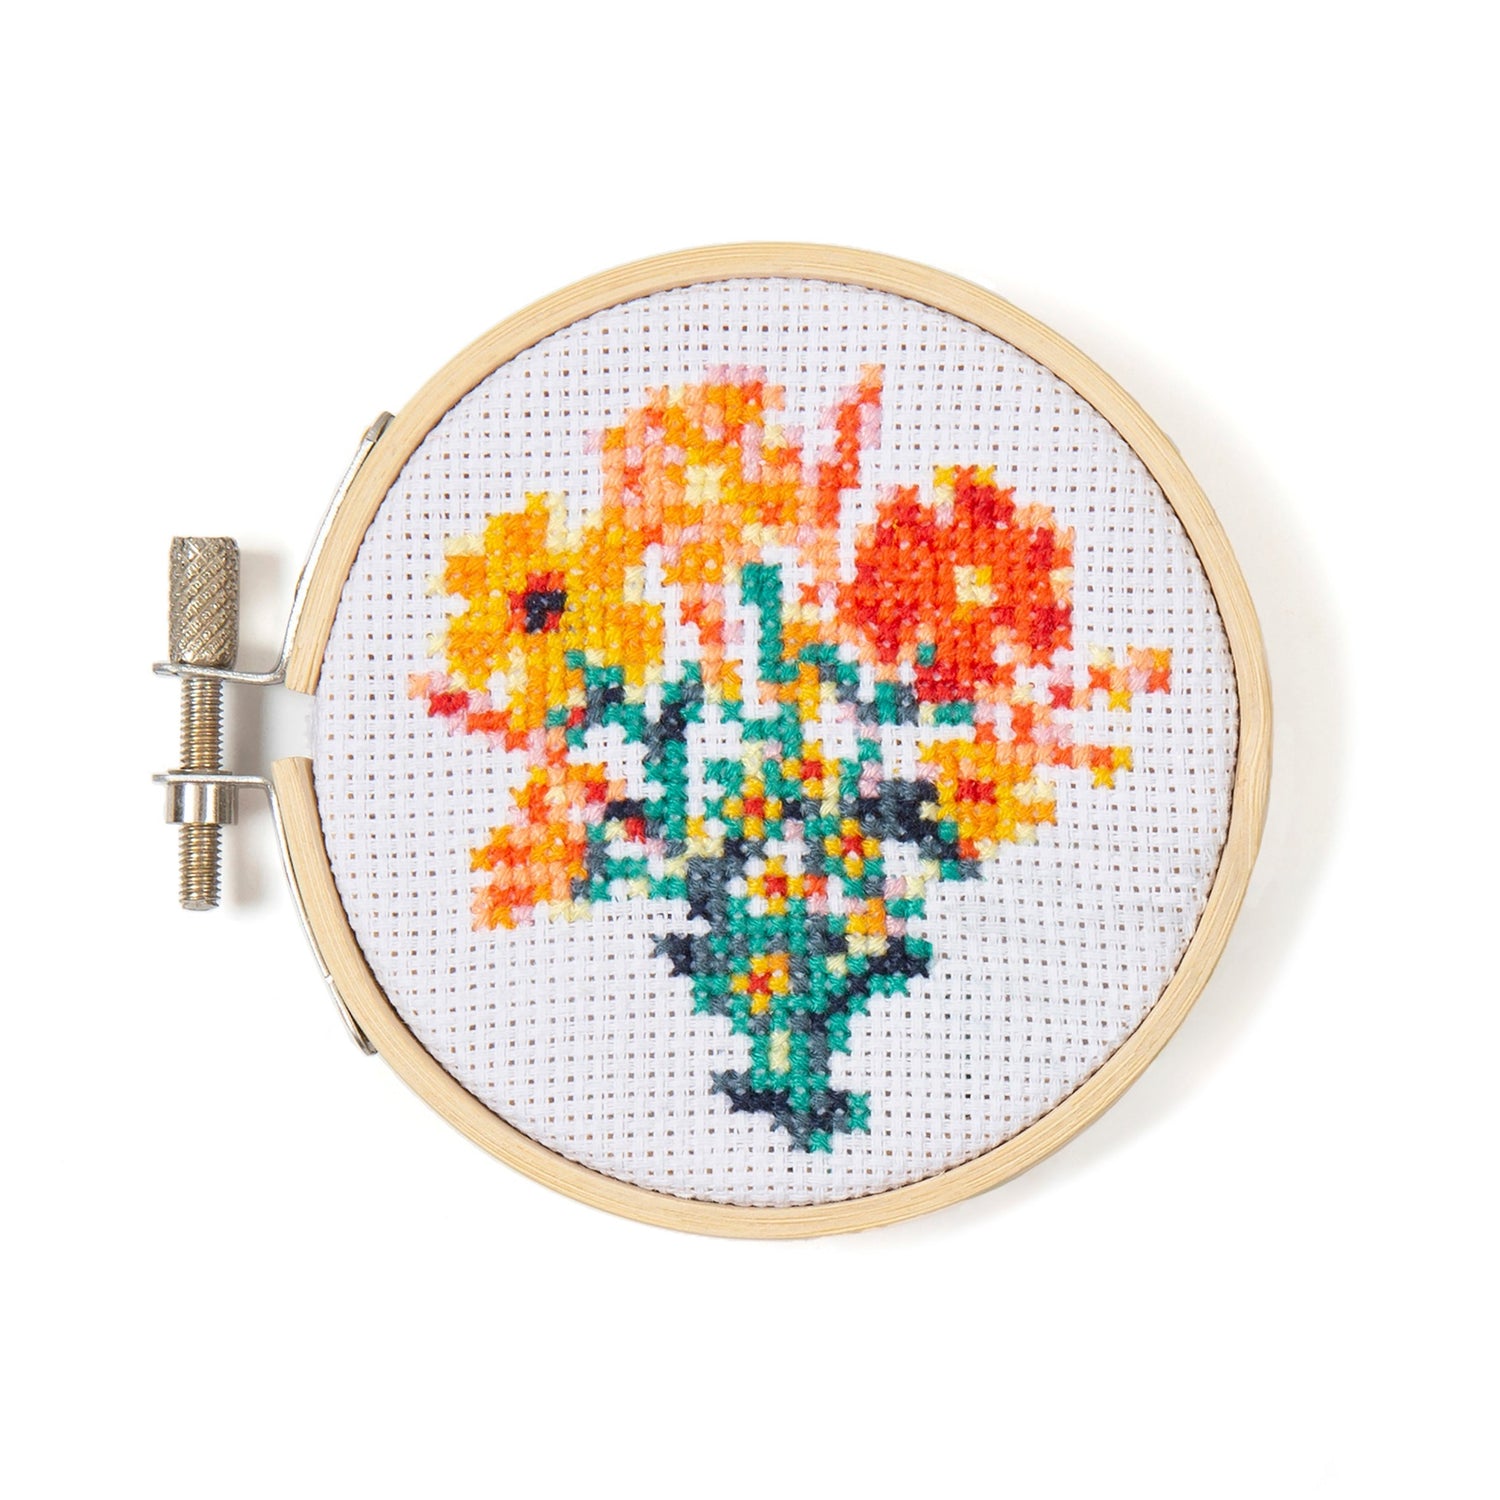 Kikkerland Mini Cross Stitch Embroidery Kit - Flowers